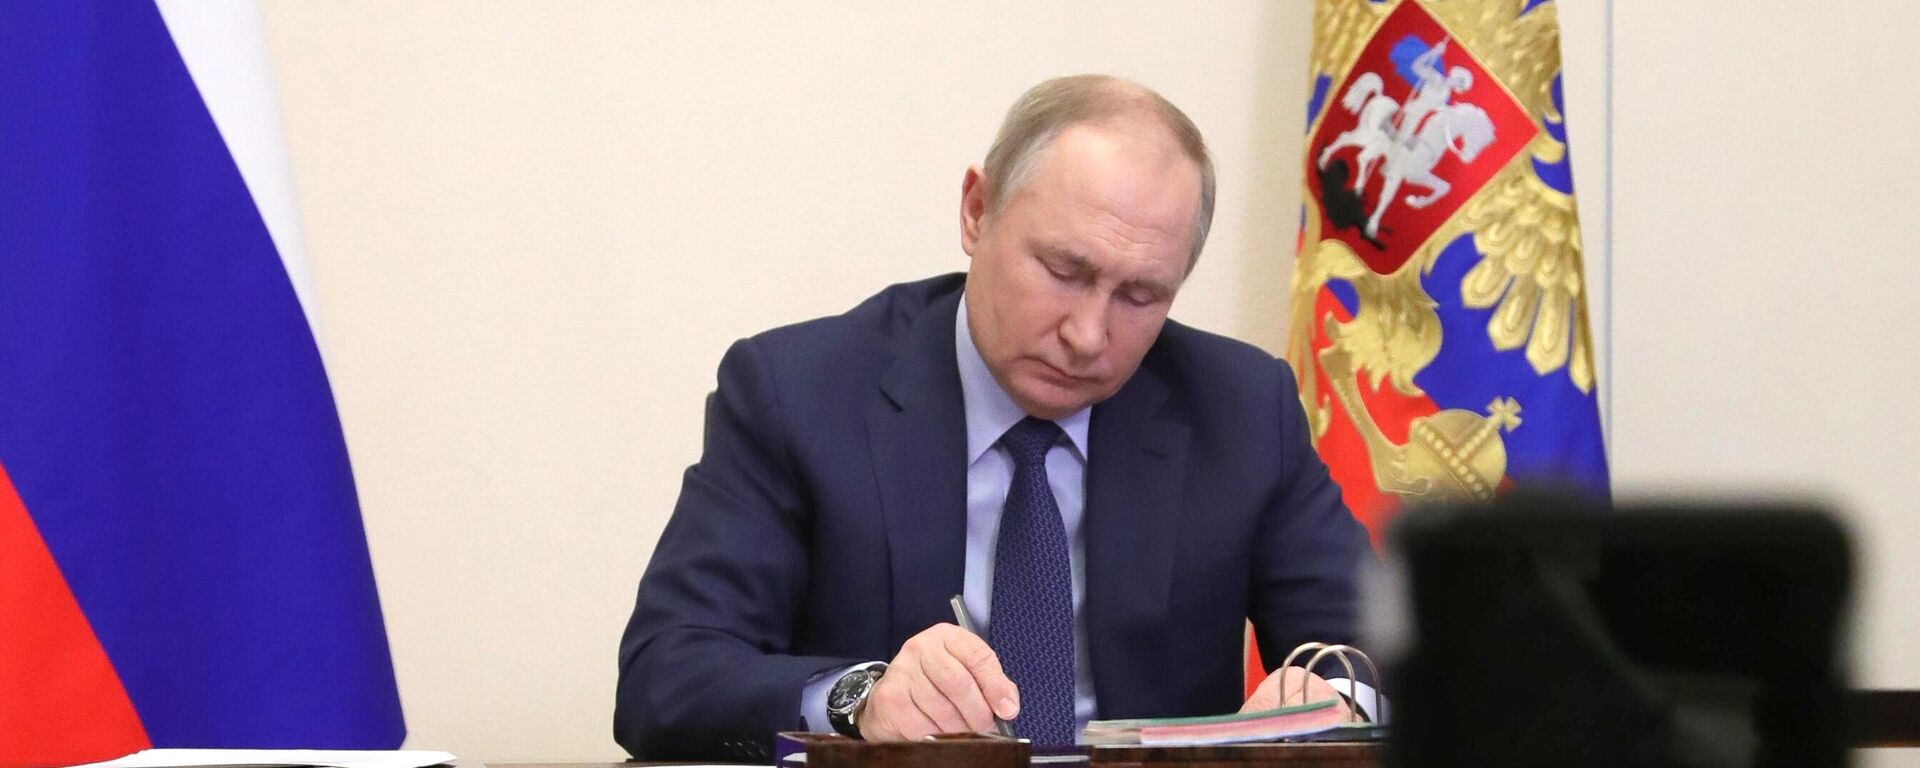 O presidente da Rússia, Vladimir Putin, participa de videoconferência em 25 de março de 2022. - Sputnik Brasil, 1920, 30.03.2022